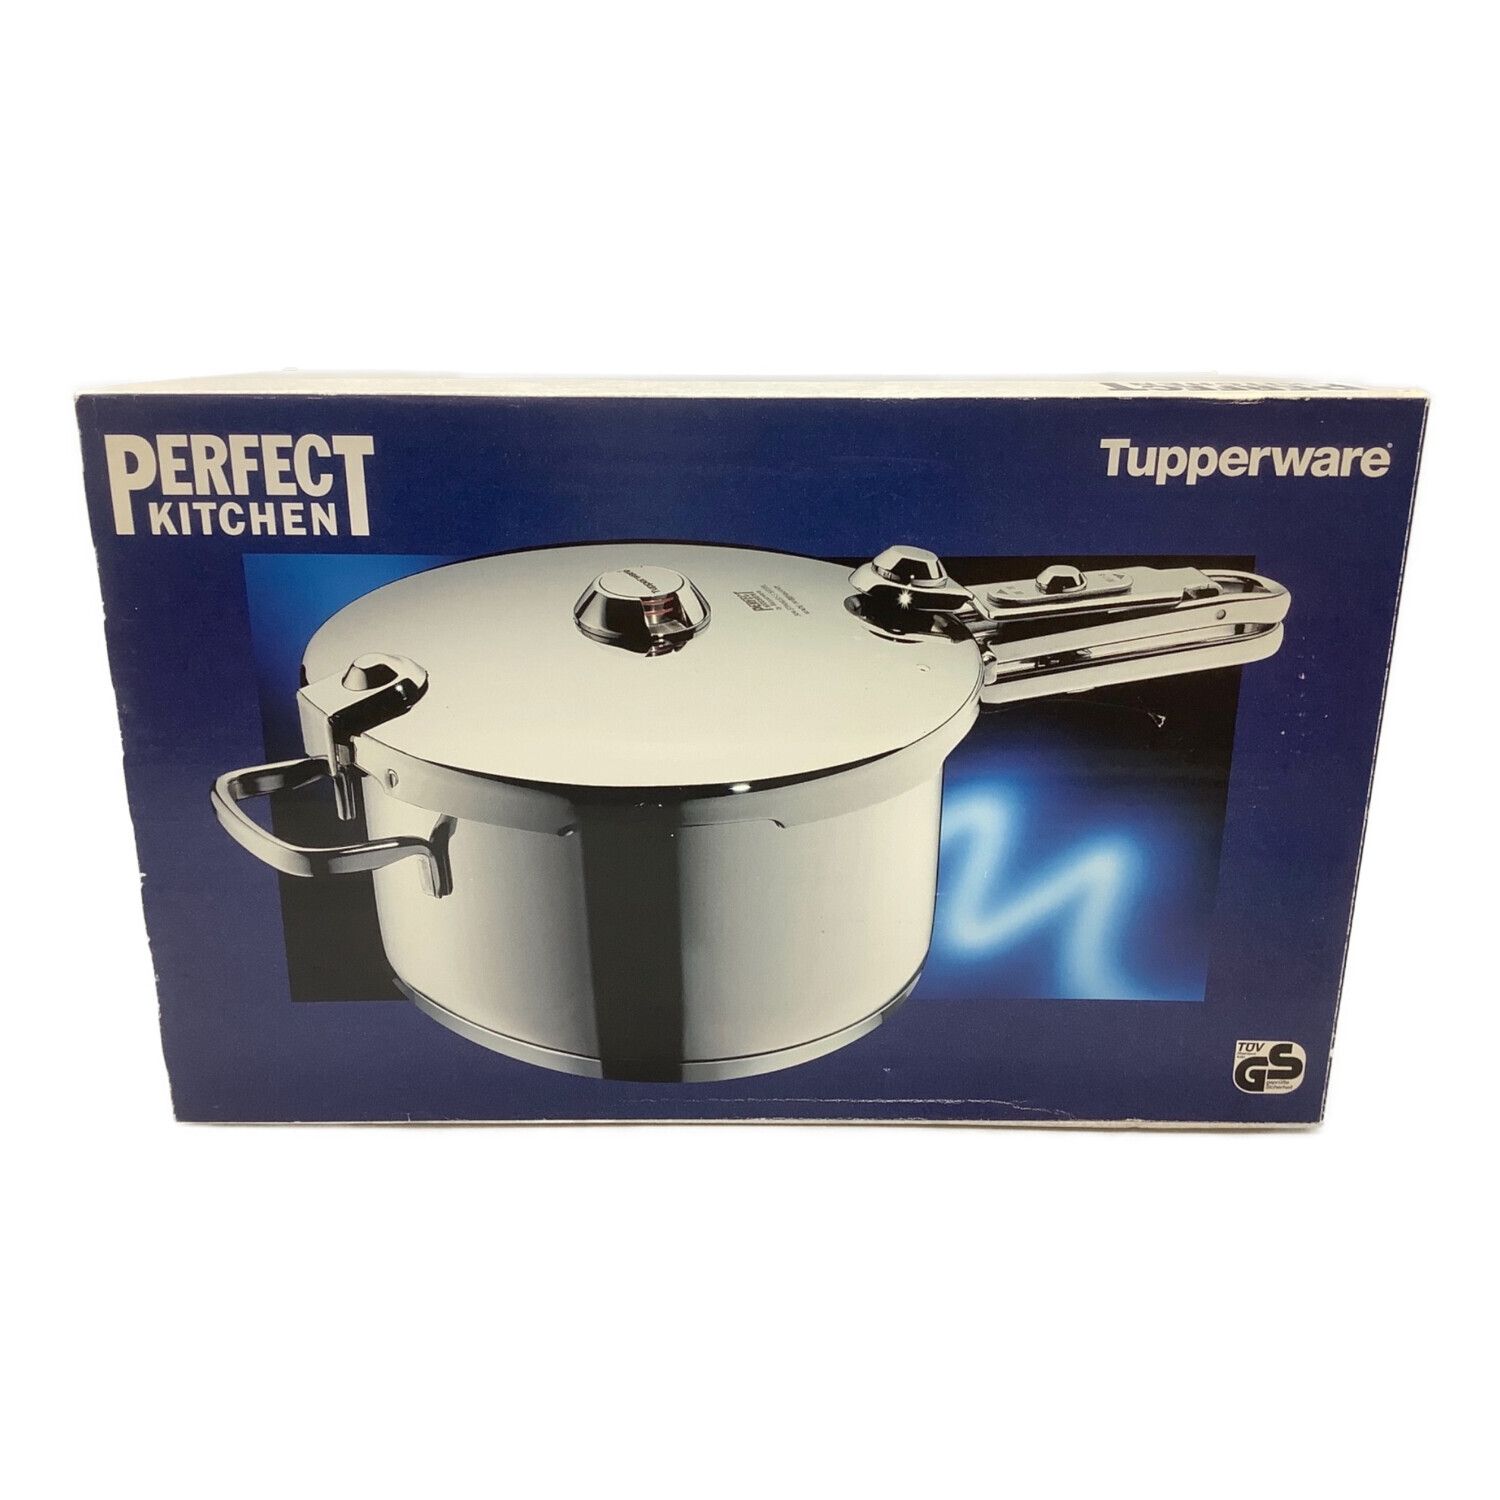 Tupperware (タッパーウェア) 圧力鍋 シルバー PERFECT KITCHEN